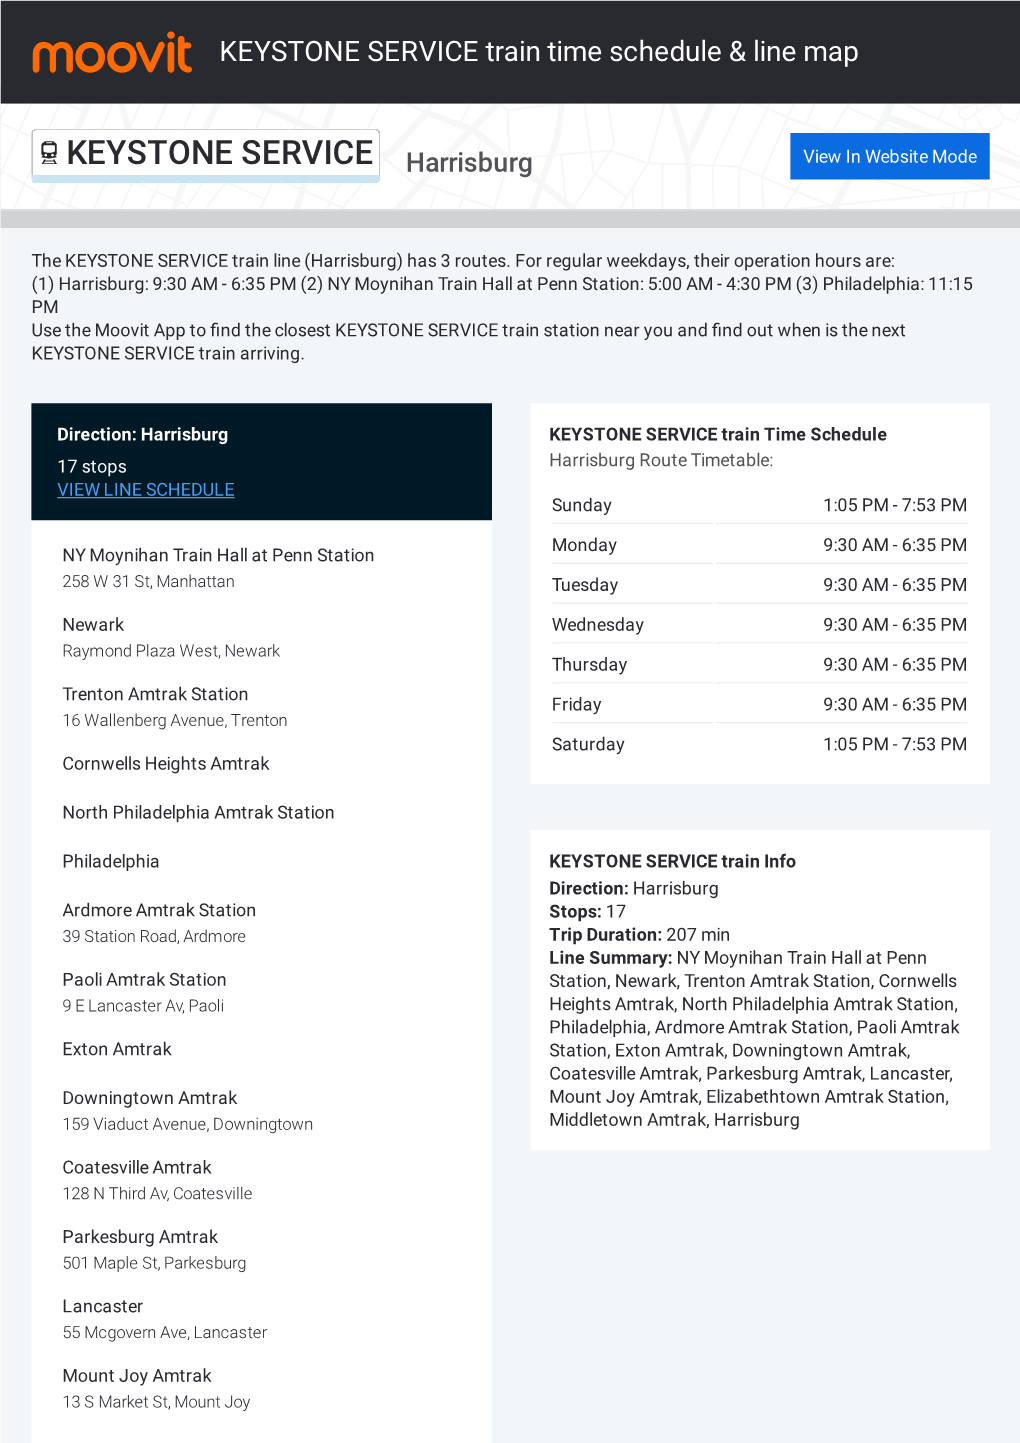 KEYSTONE SERVICE Train Time Schedule & Line Route